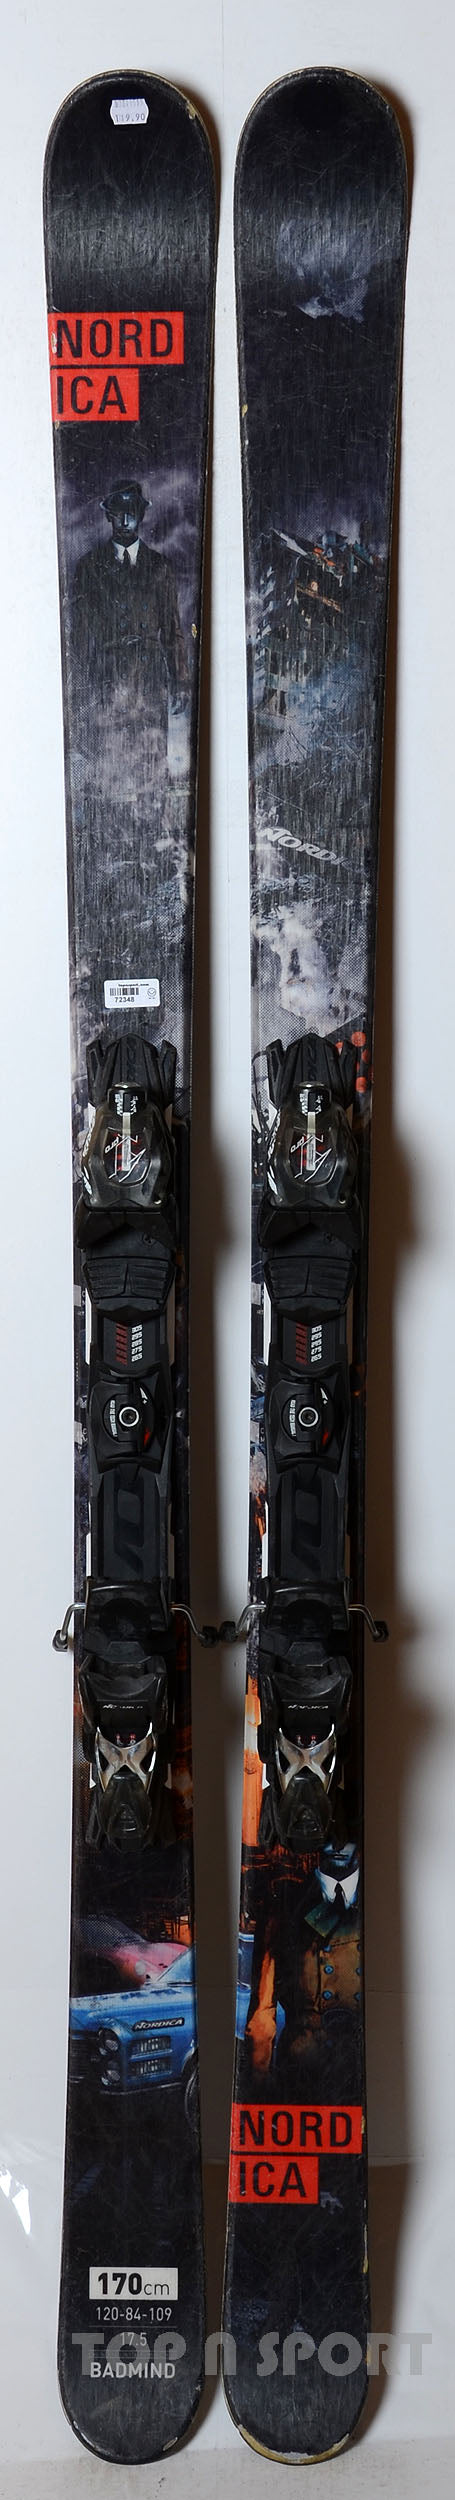 Nordica BADMIND - skis d'occasion